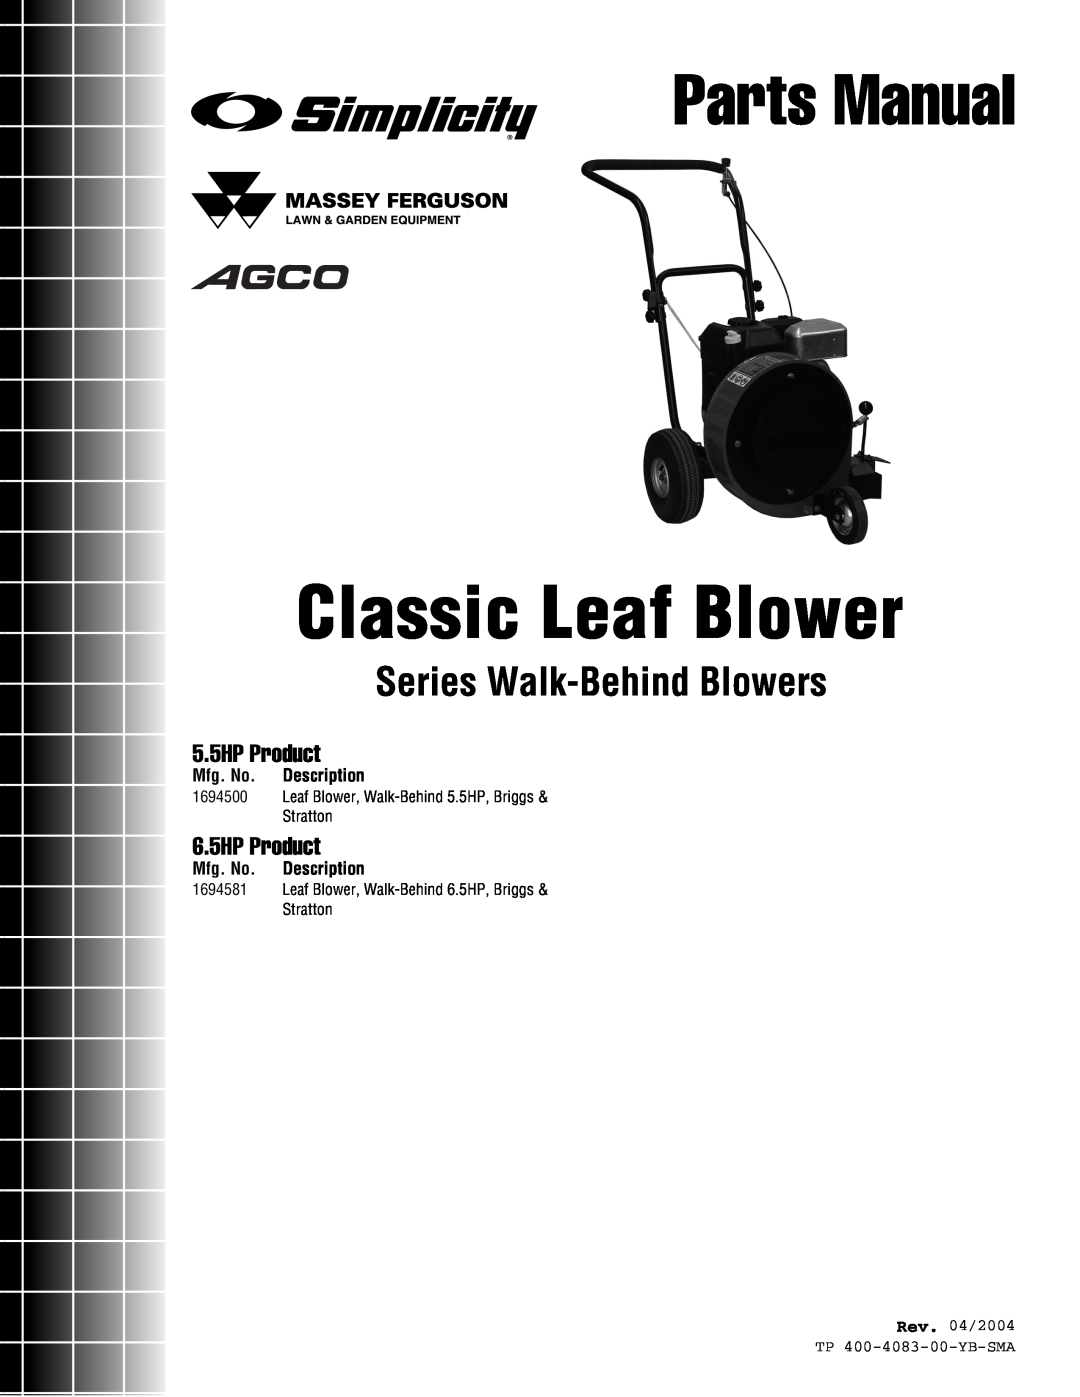 Simplicity 1694581 manual Mfg. No. Description, Rev. 04/2004 TP 400-4083-00-YB-SMA, Classic Leaf Blower, Parts Manual 